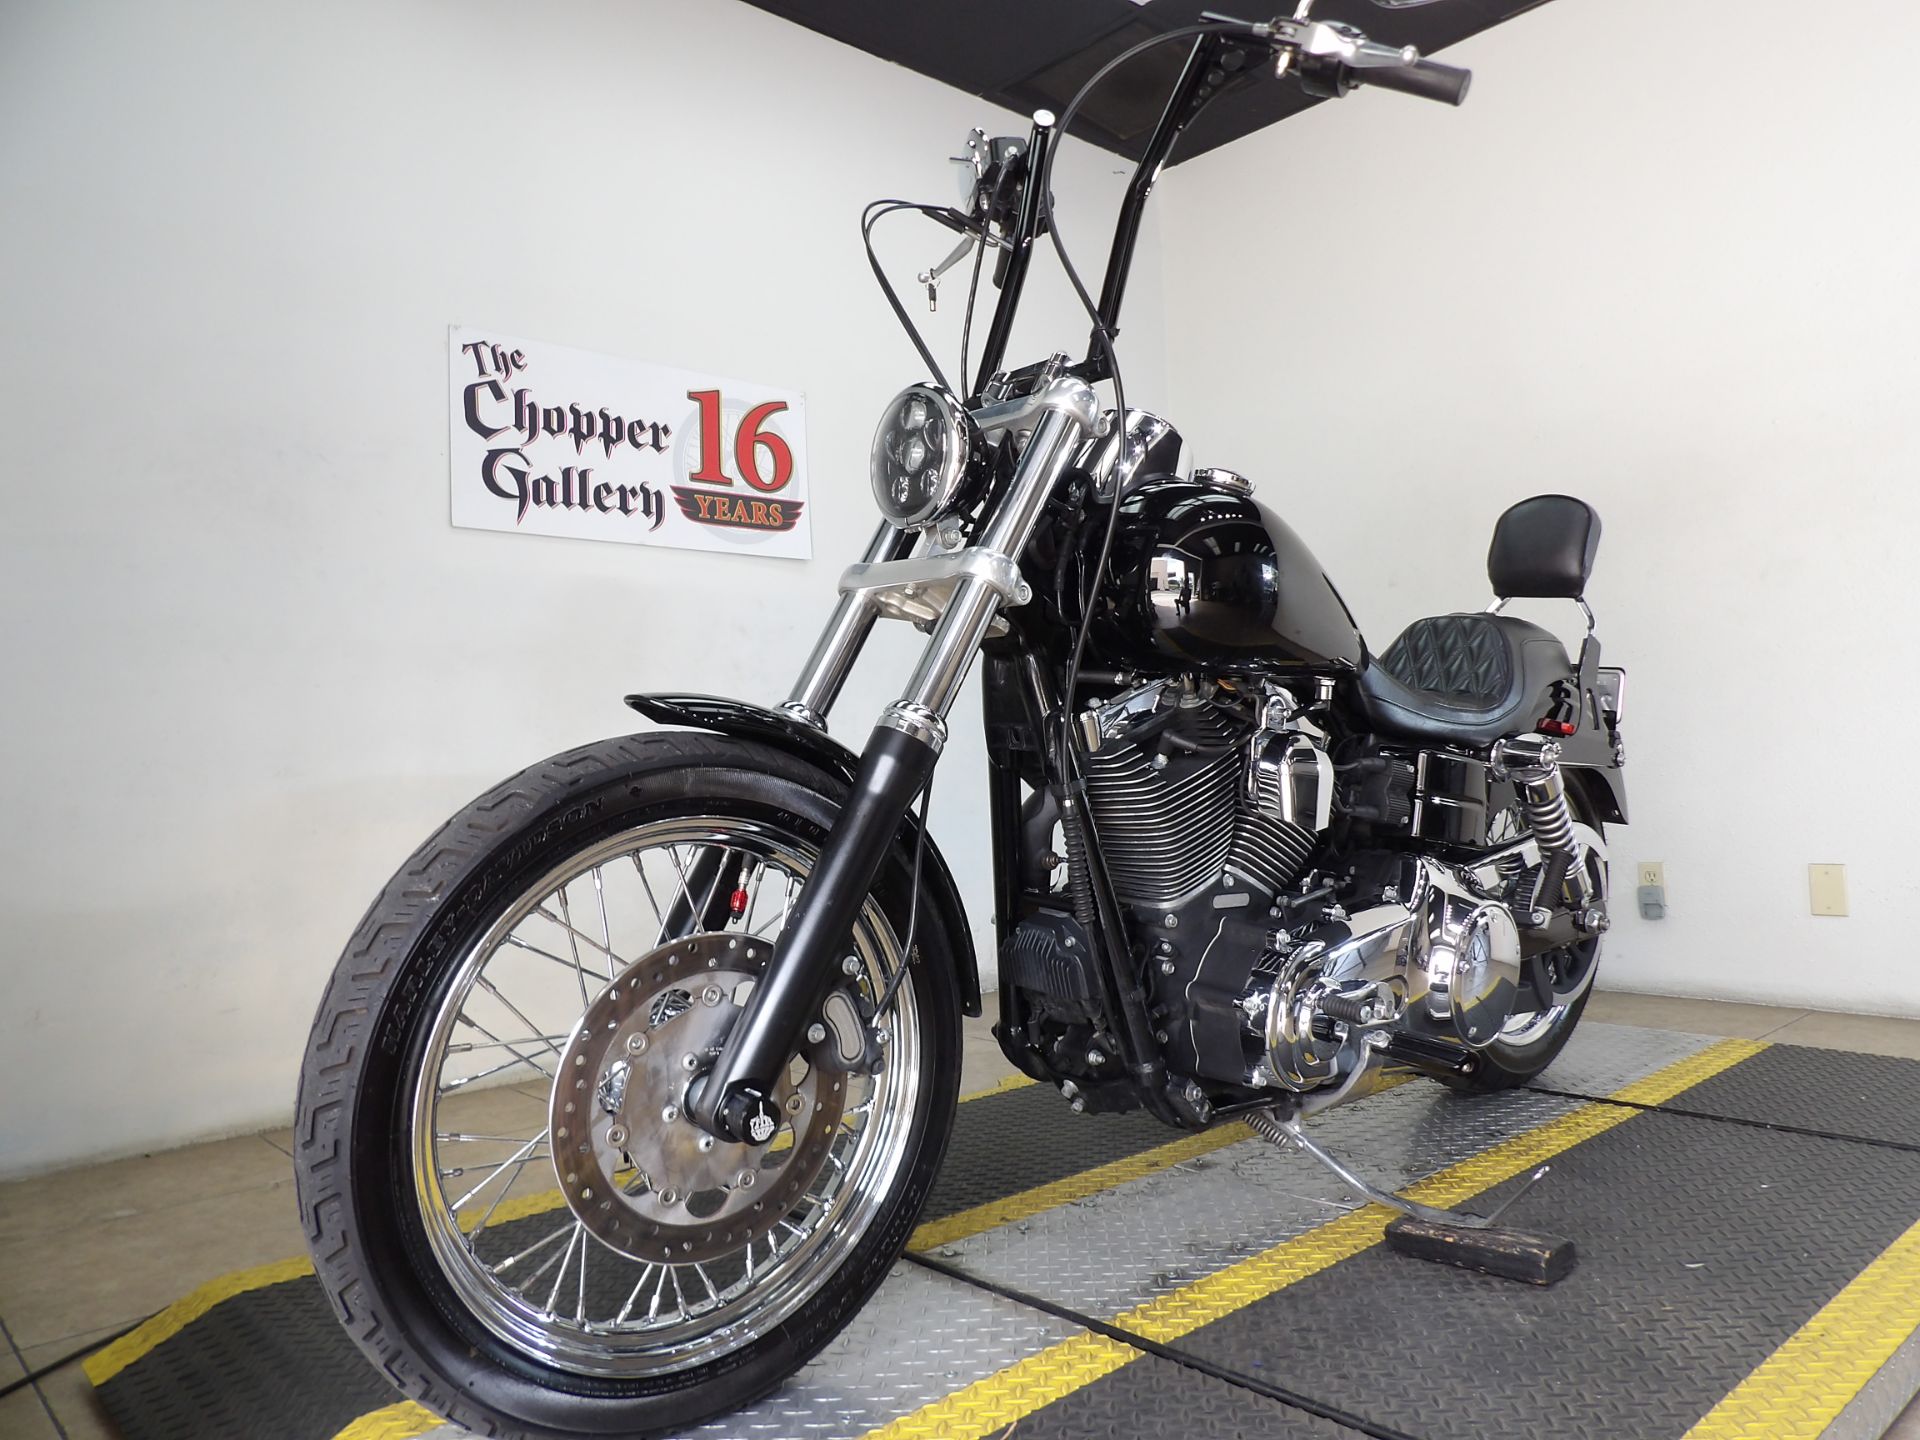 2013 Harley-Davidson Dyna® Super Glide® Custom in Temecula, California - Photo 34